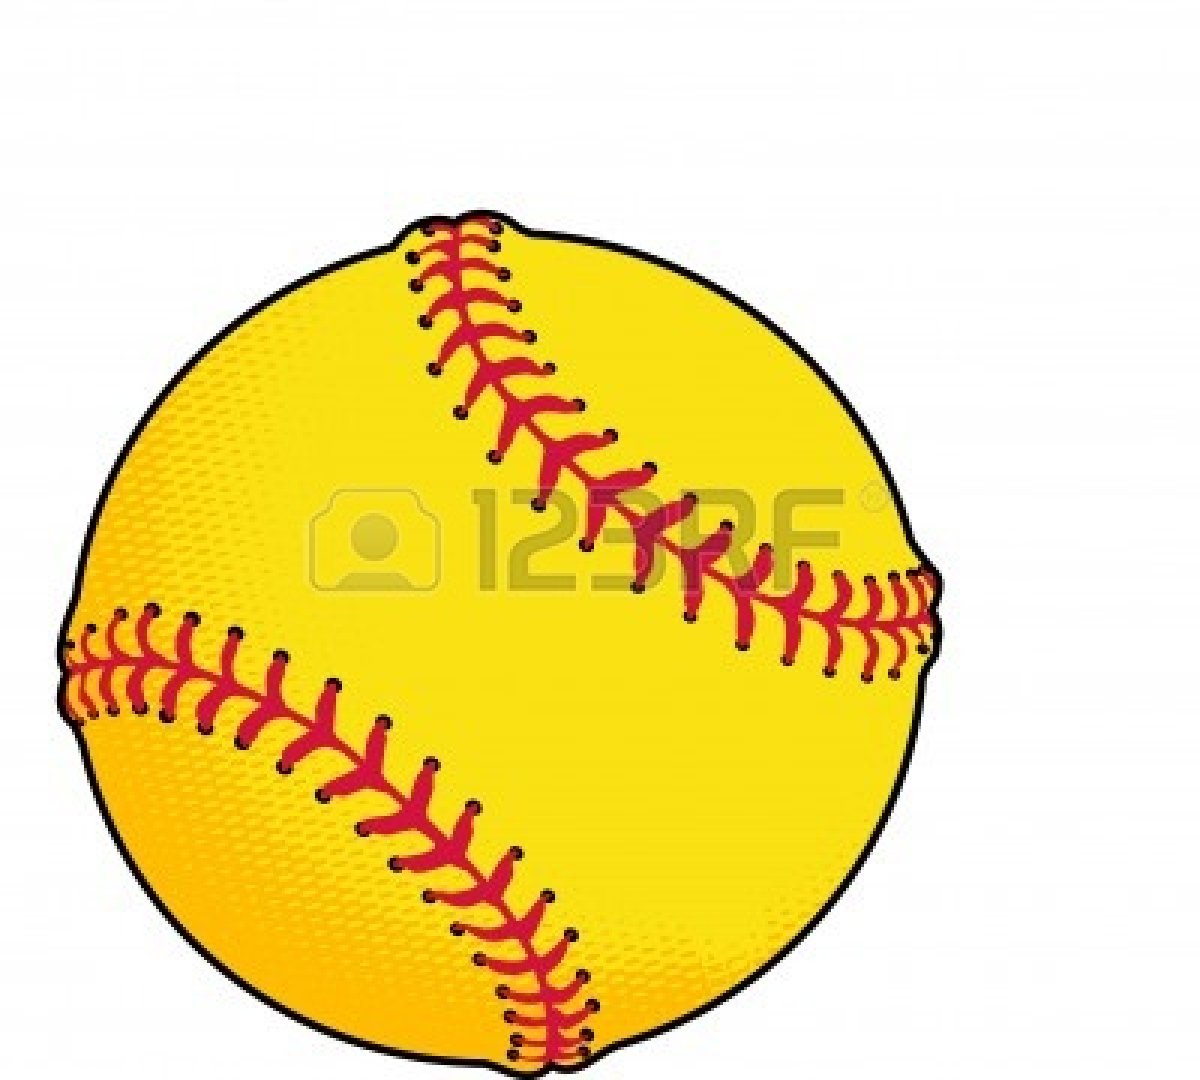 Softball clip art logo free c